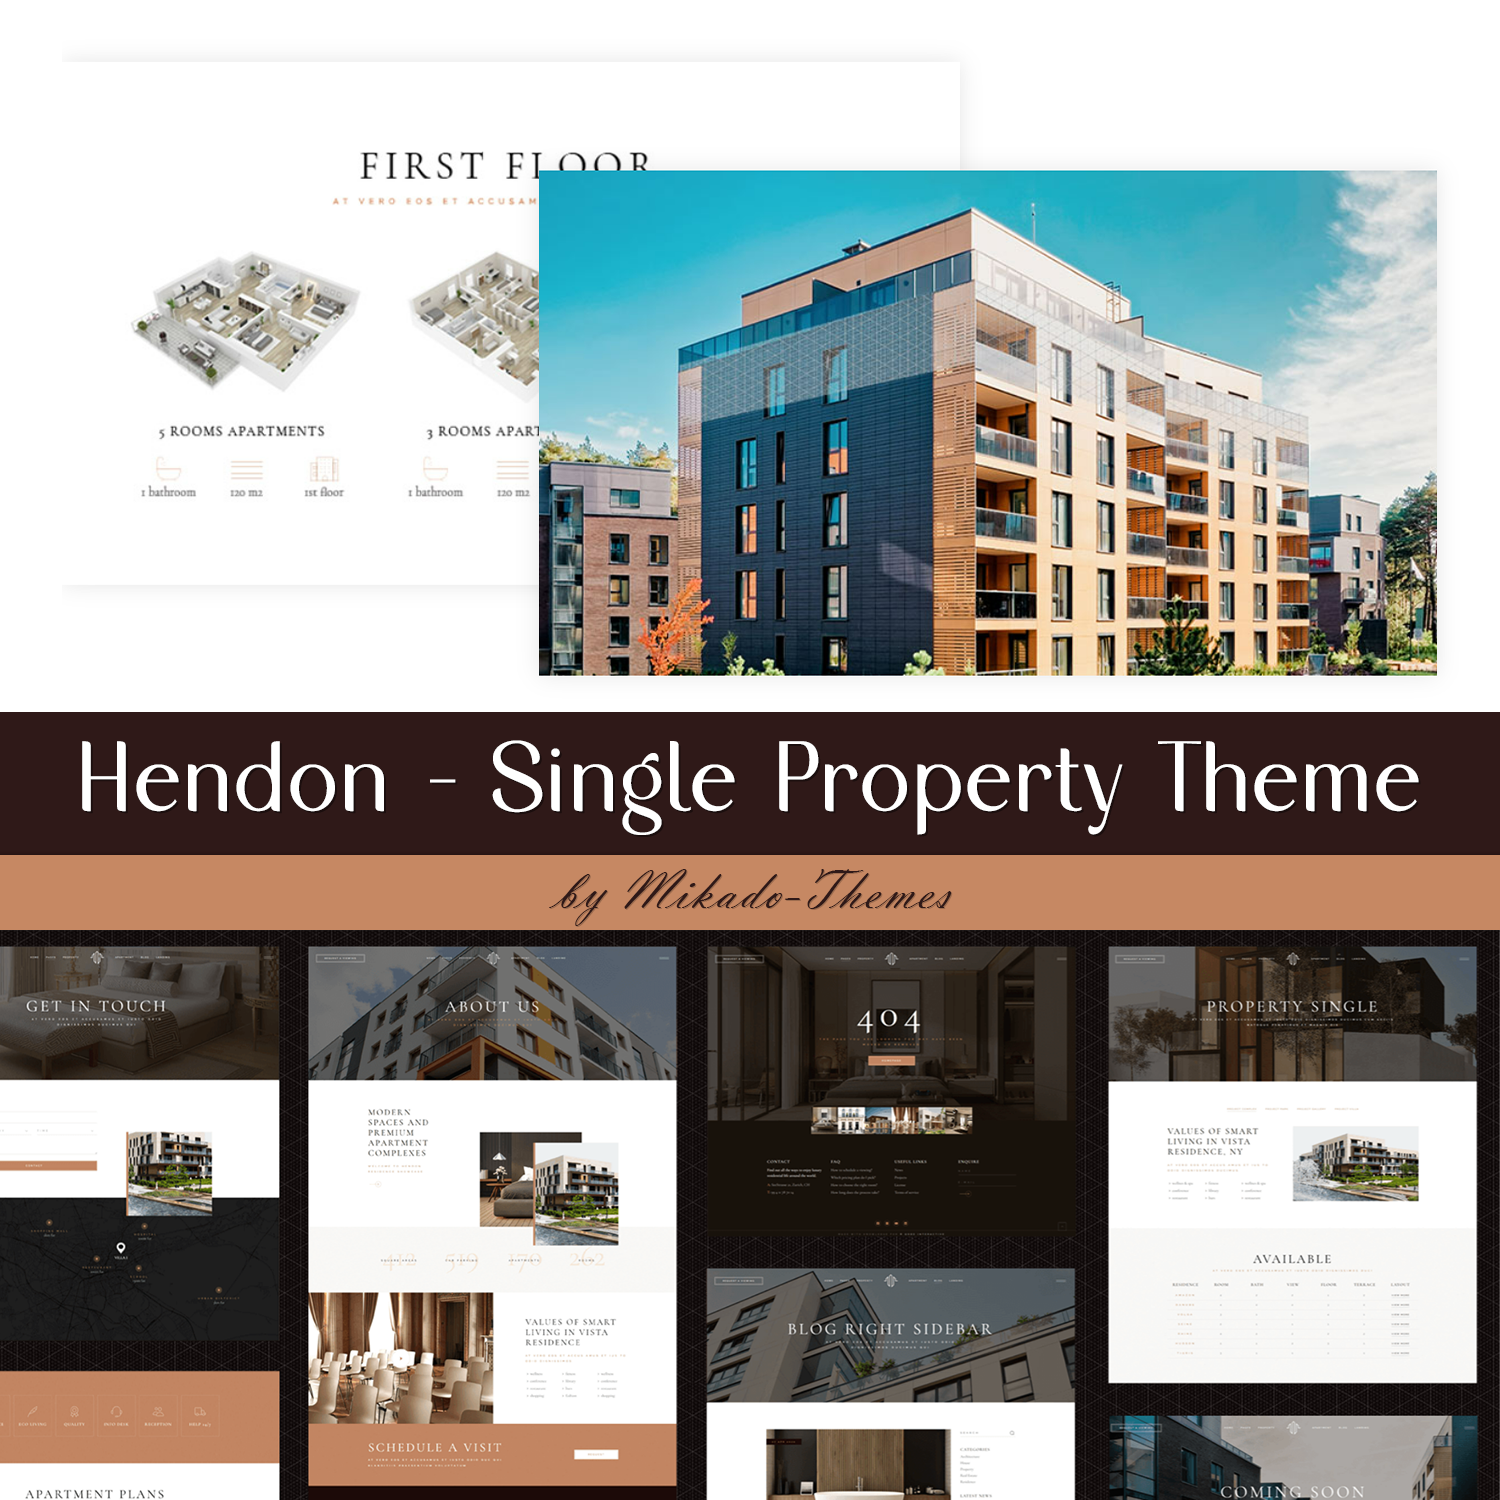 Hendon - Single Property Theme cover.